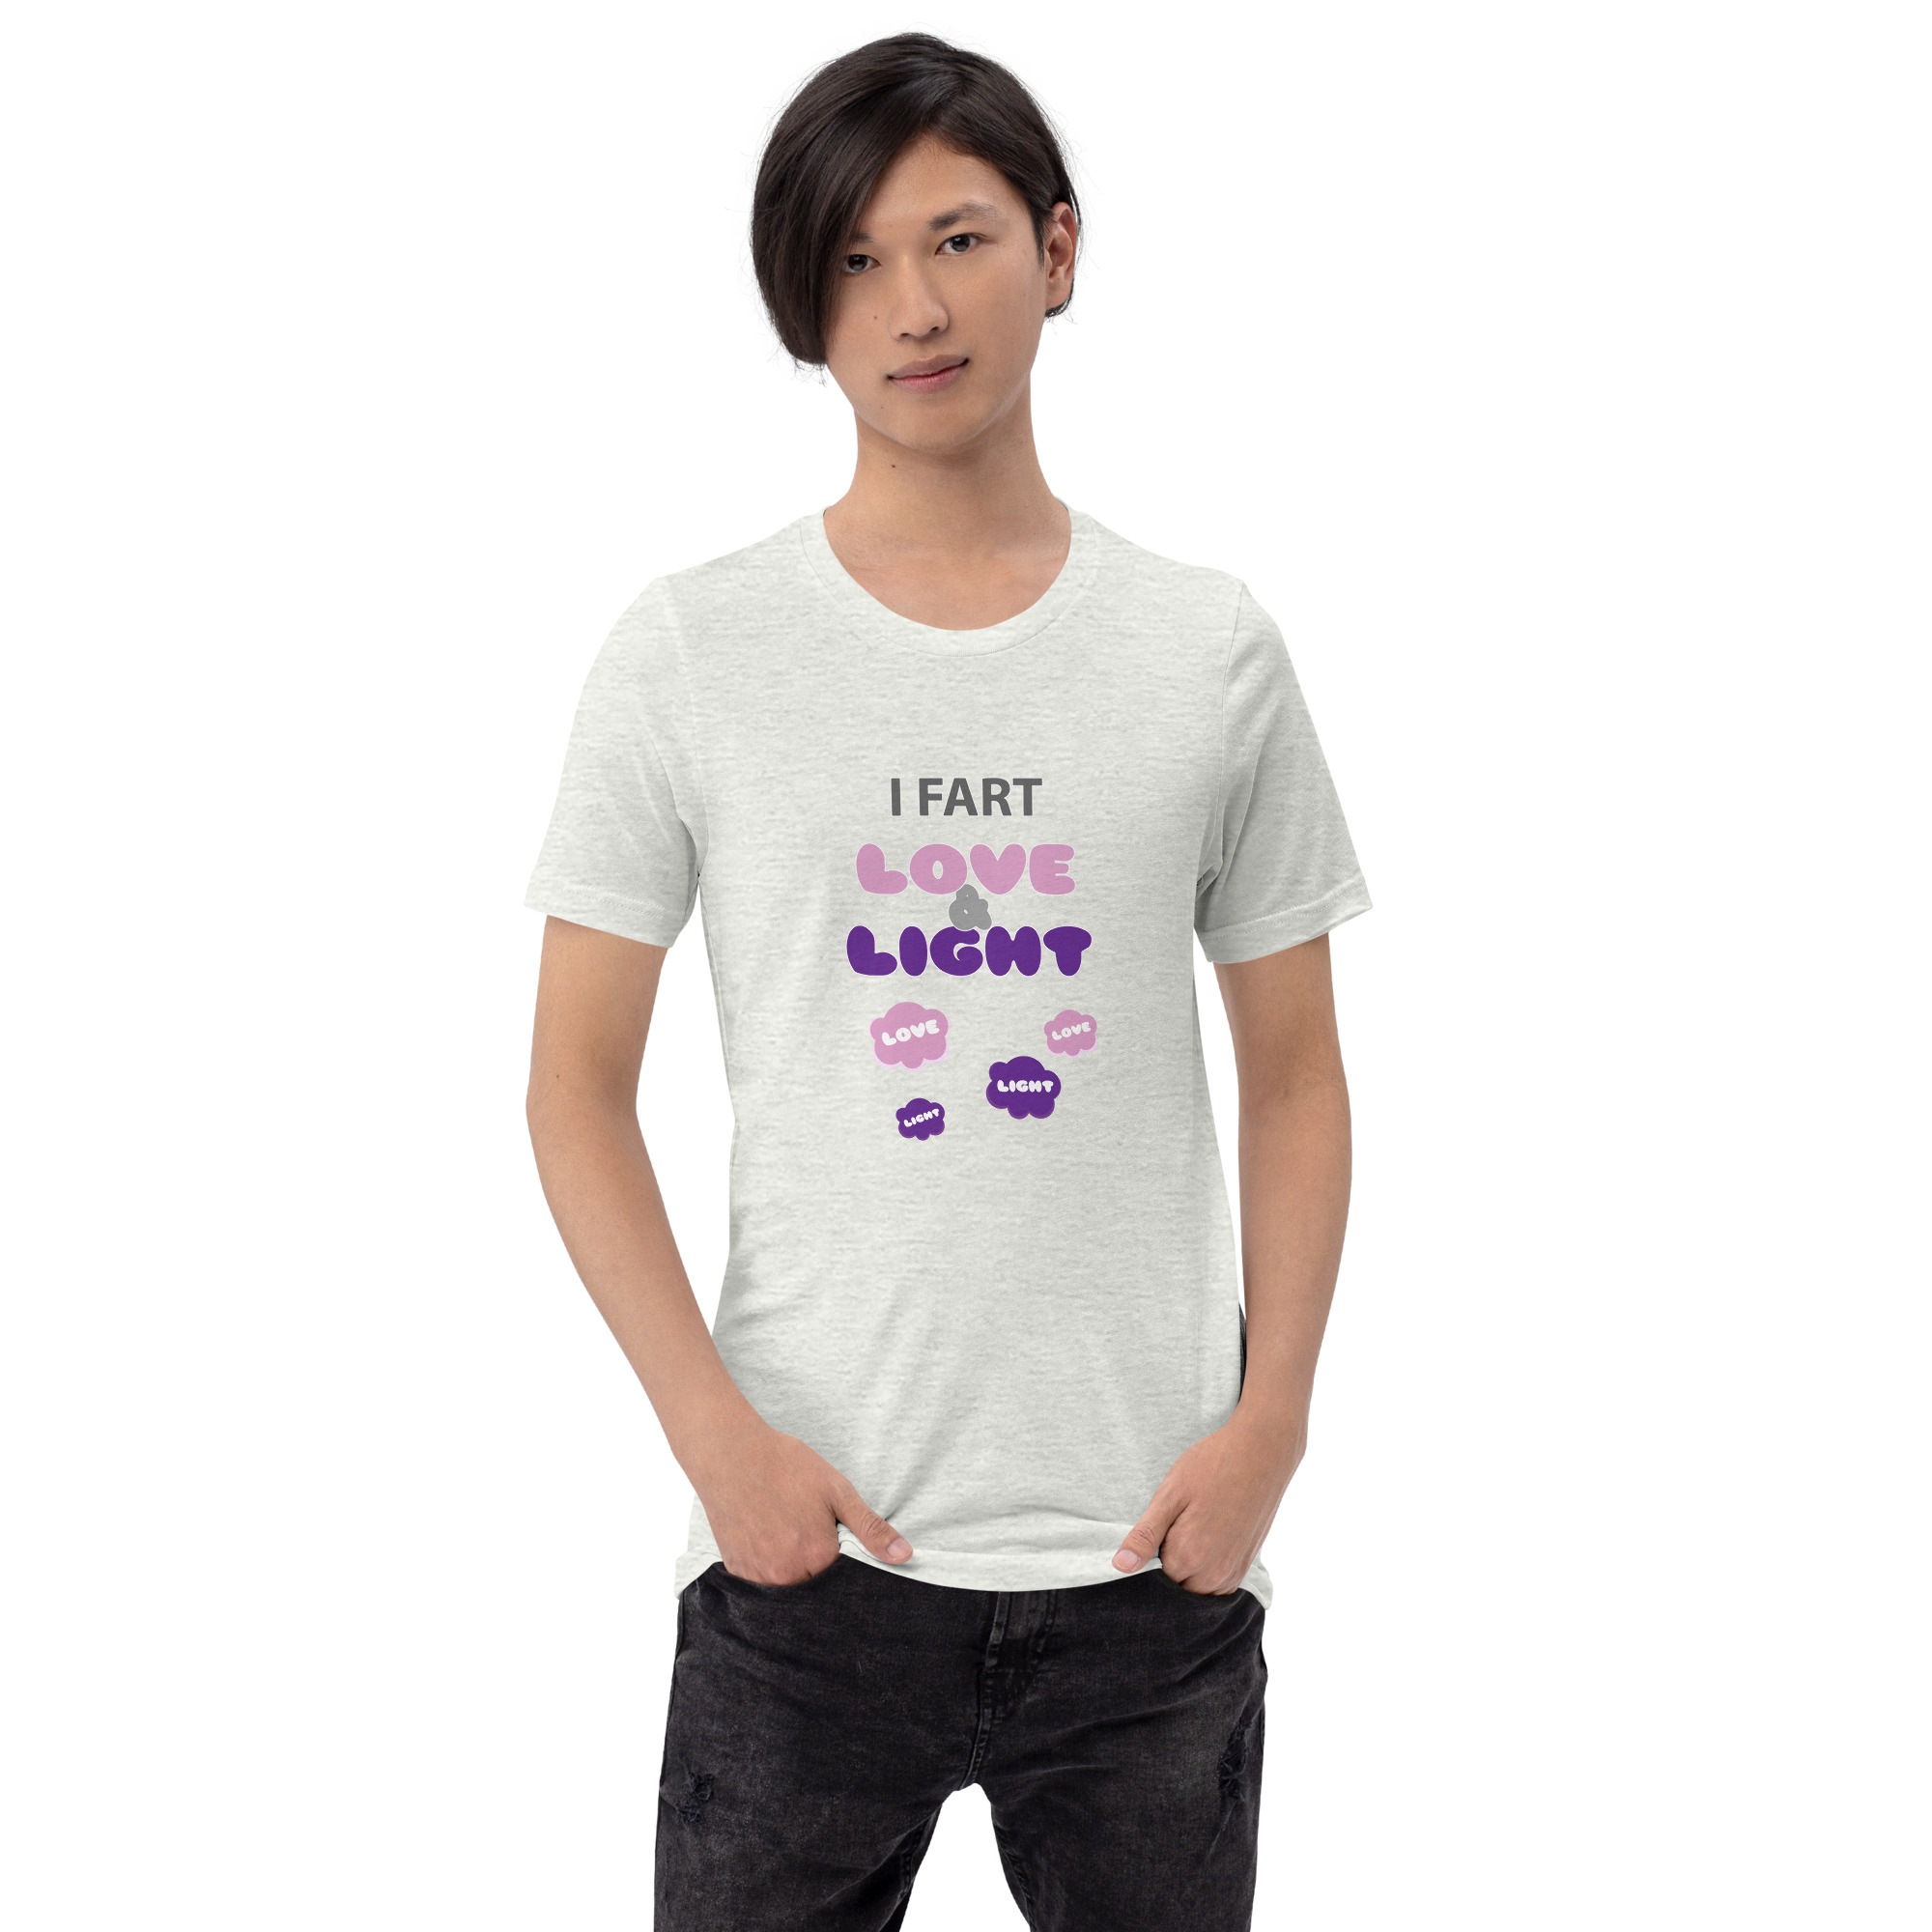 I Fart Love and Light Tshirt